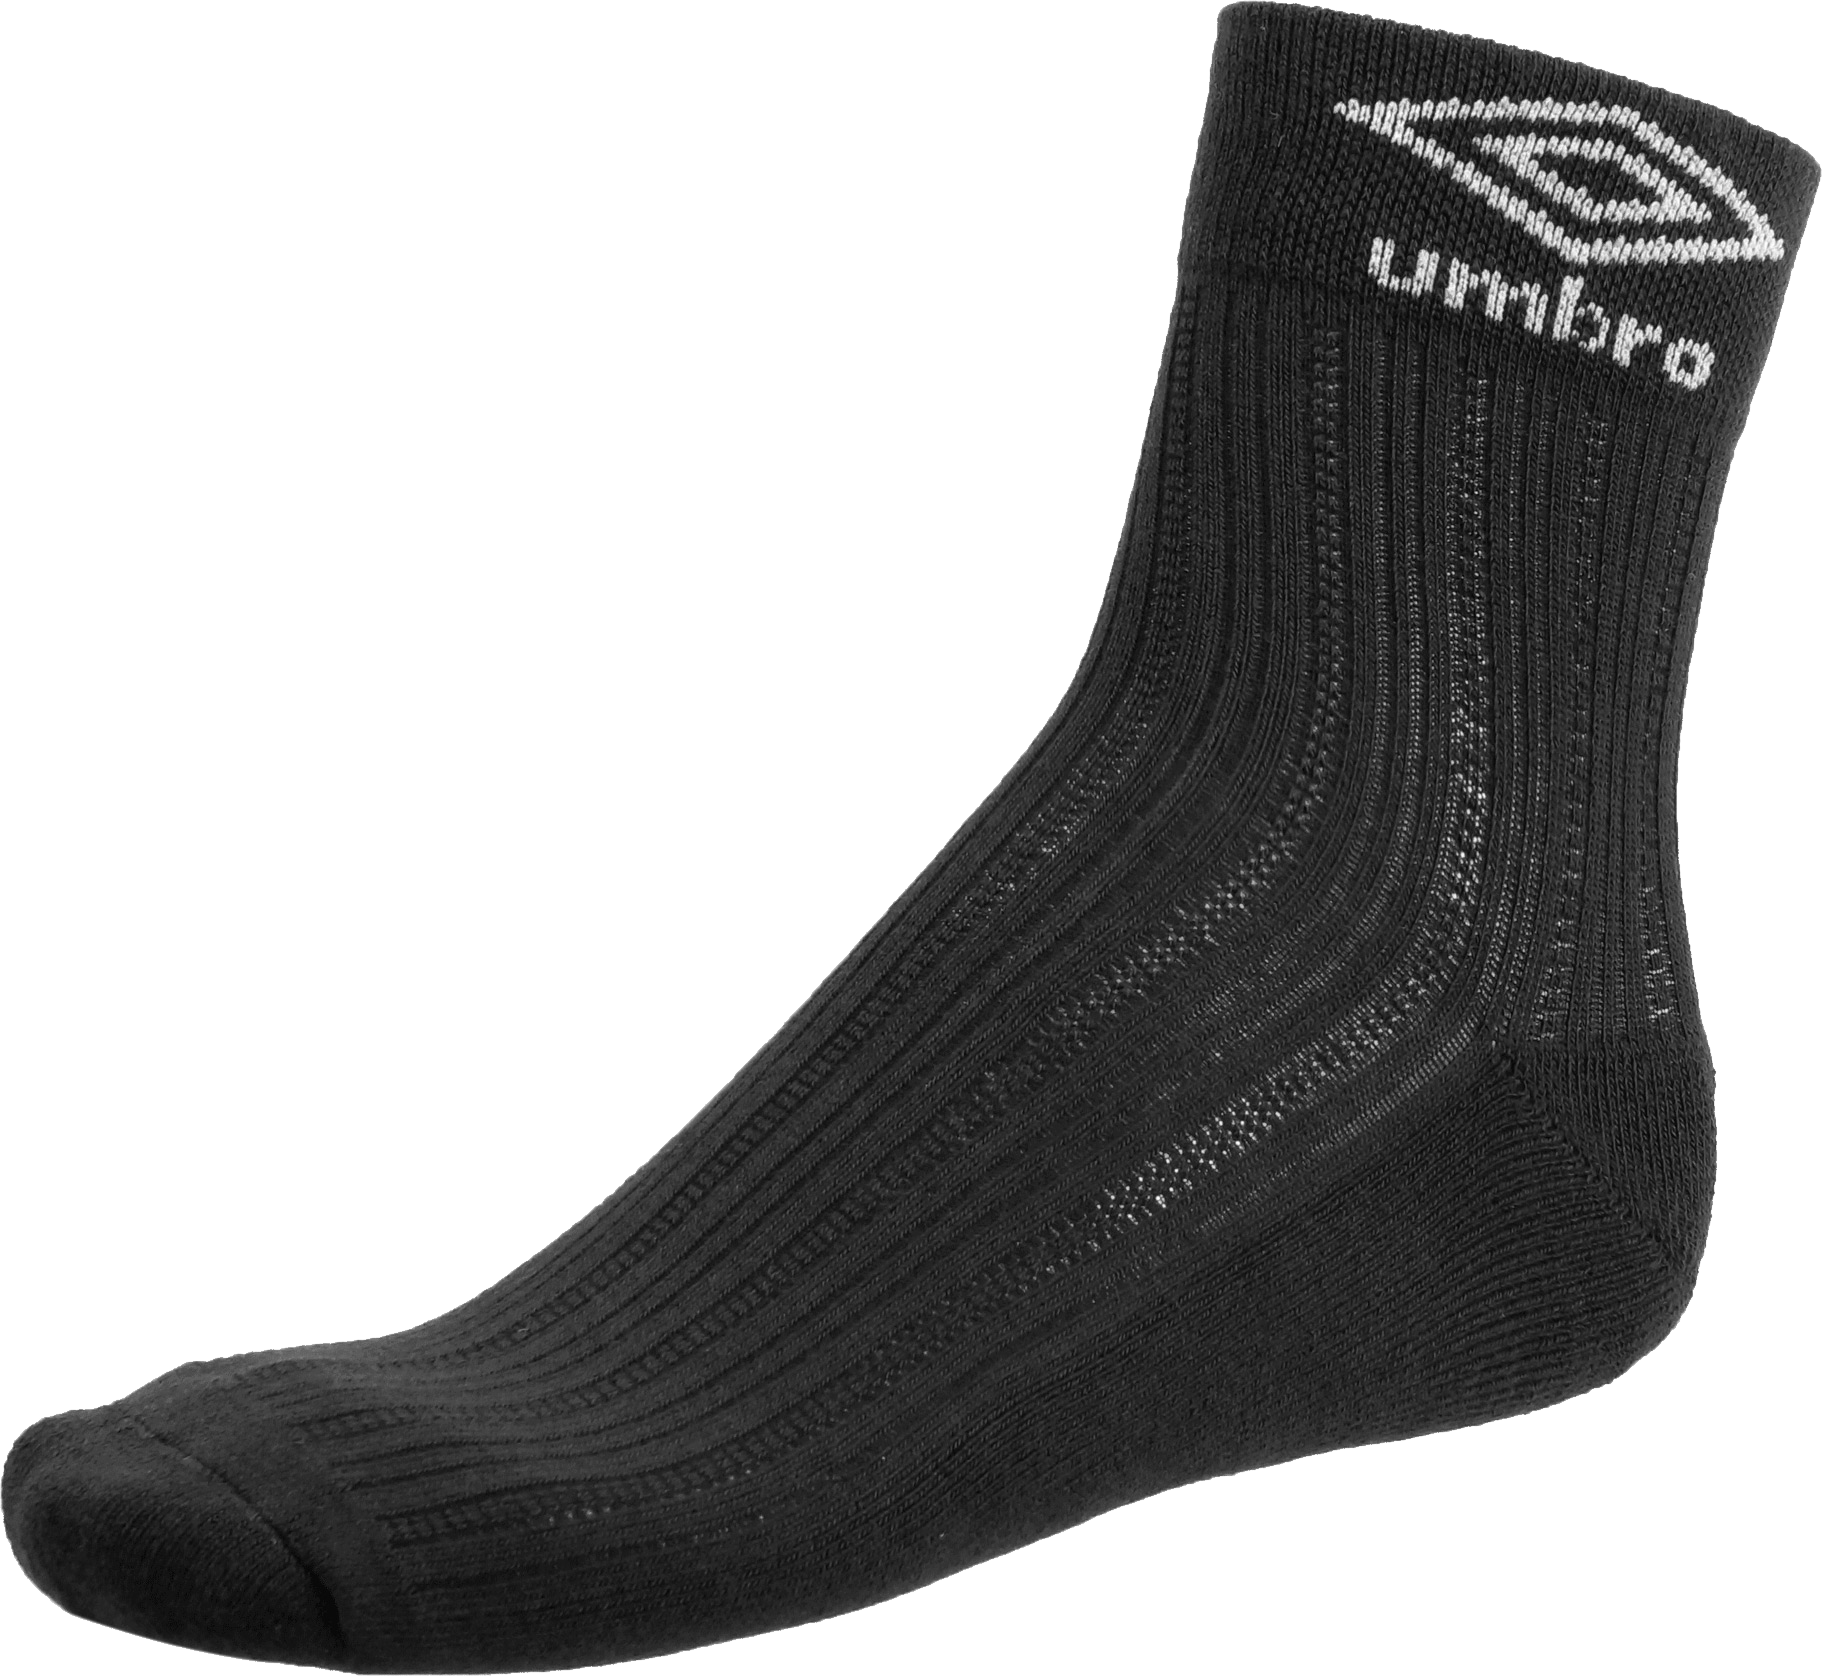 Umbro Black Socks